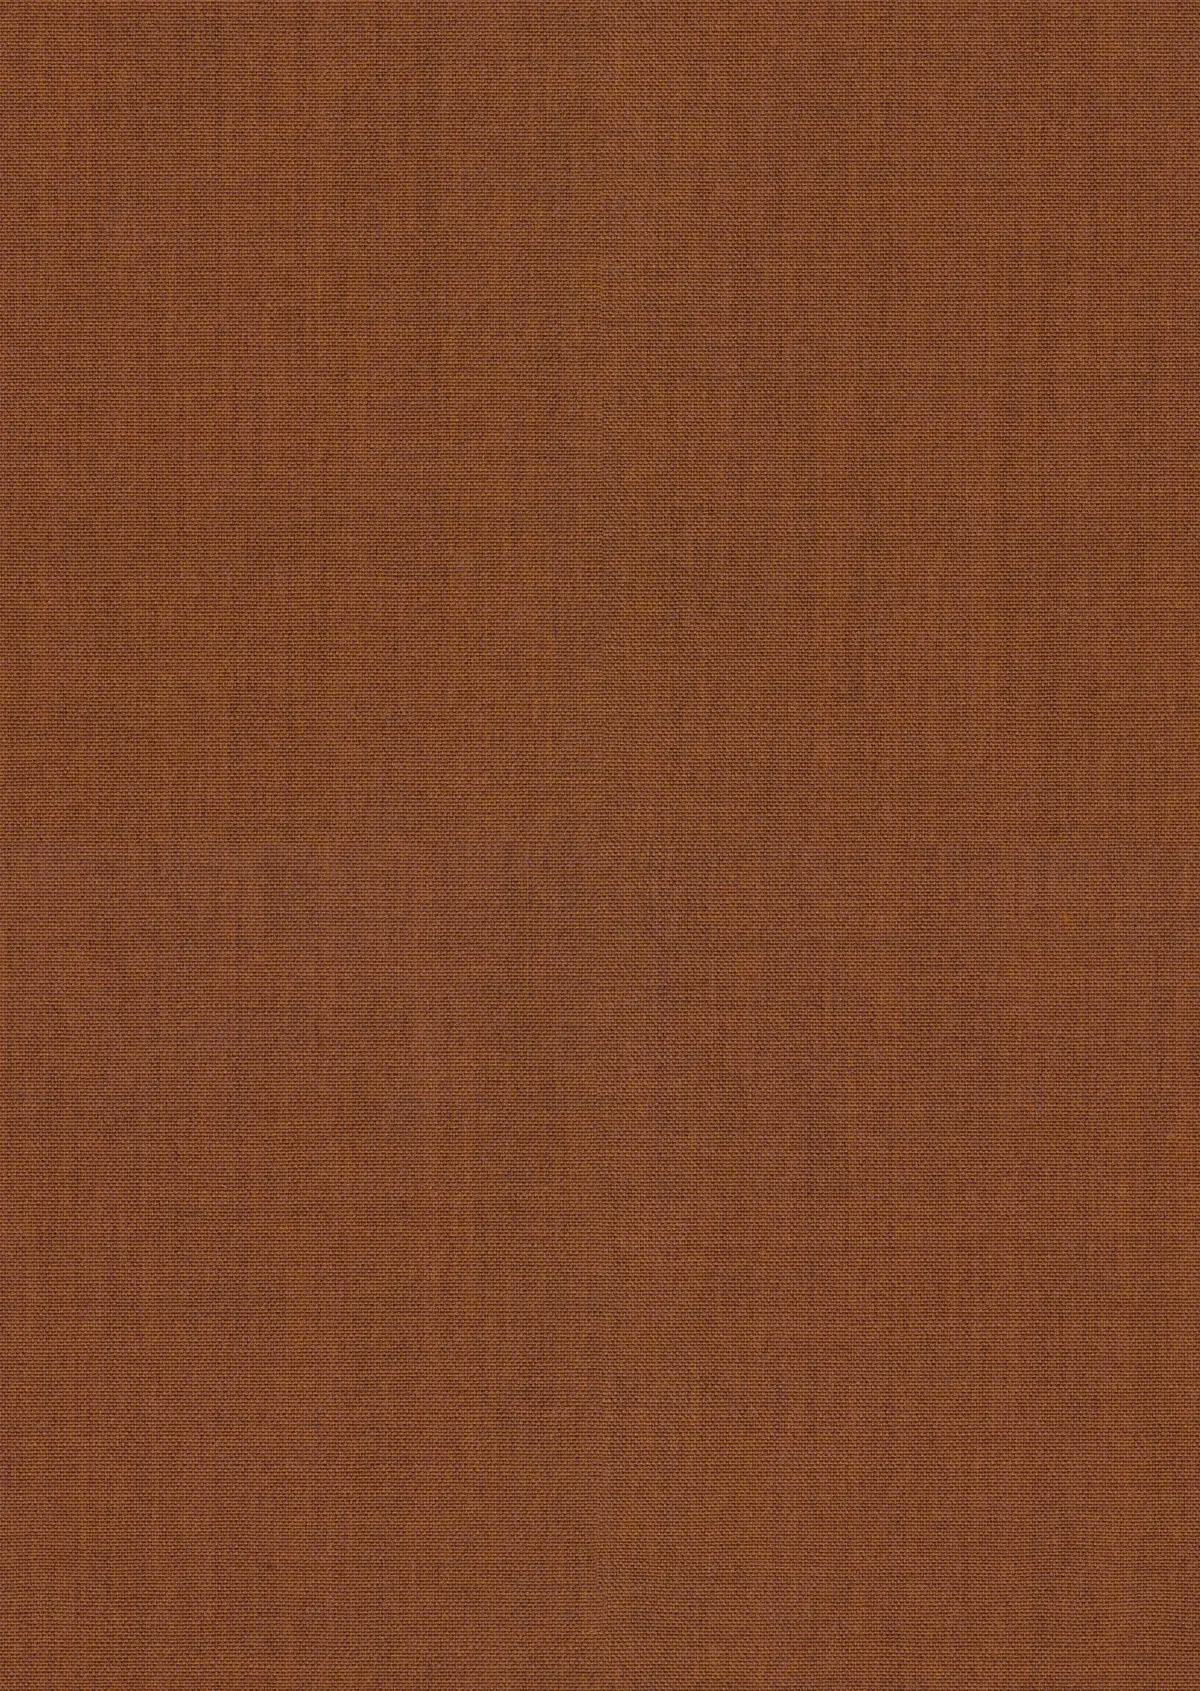 Fabric sample Remix 3 452 brown